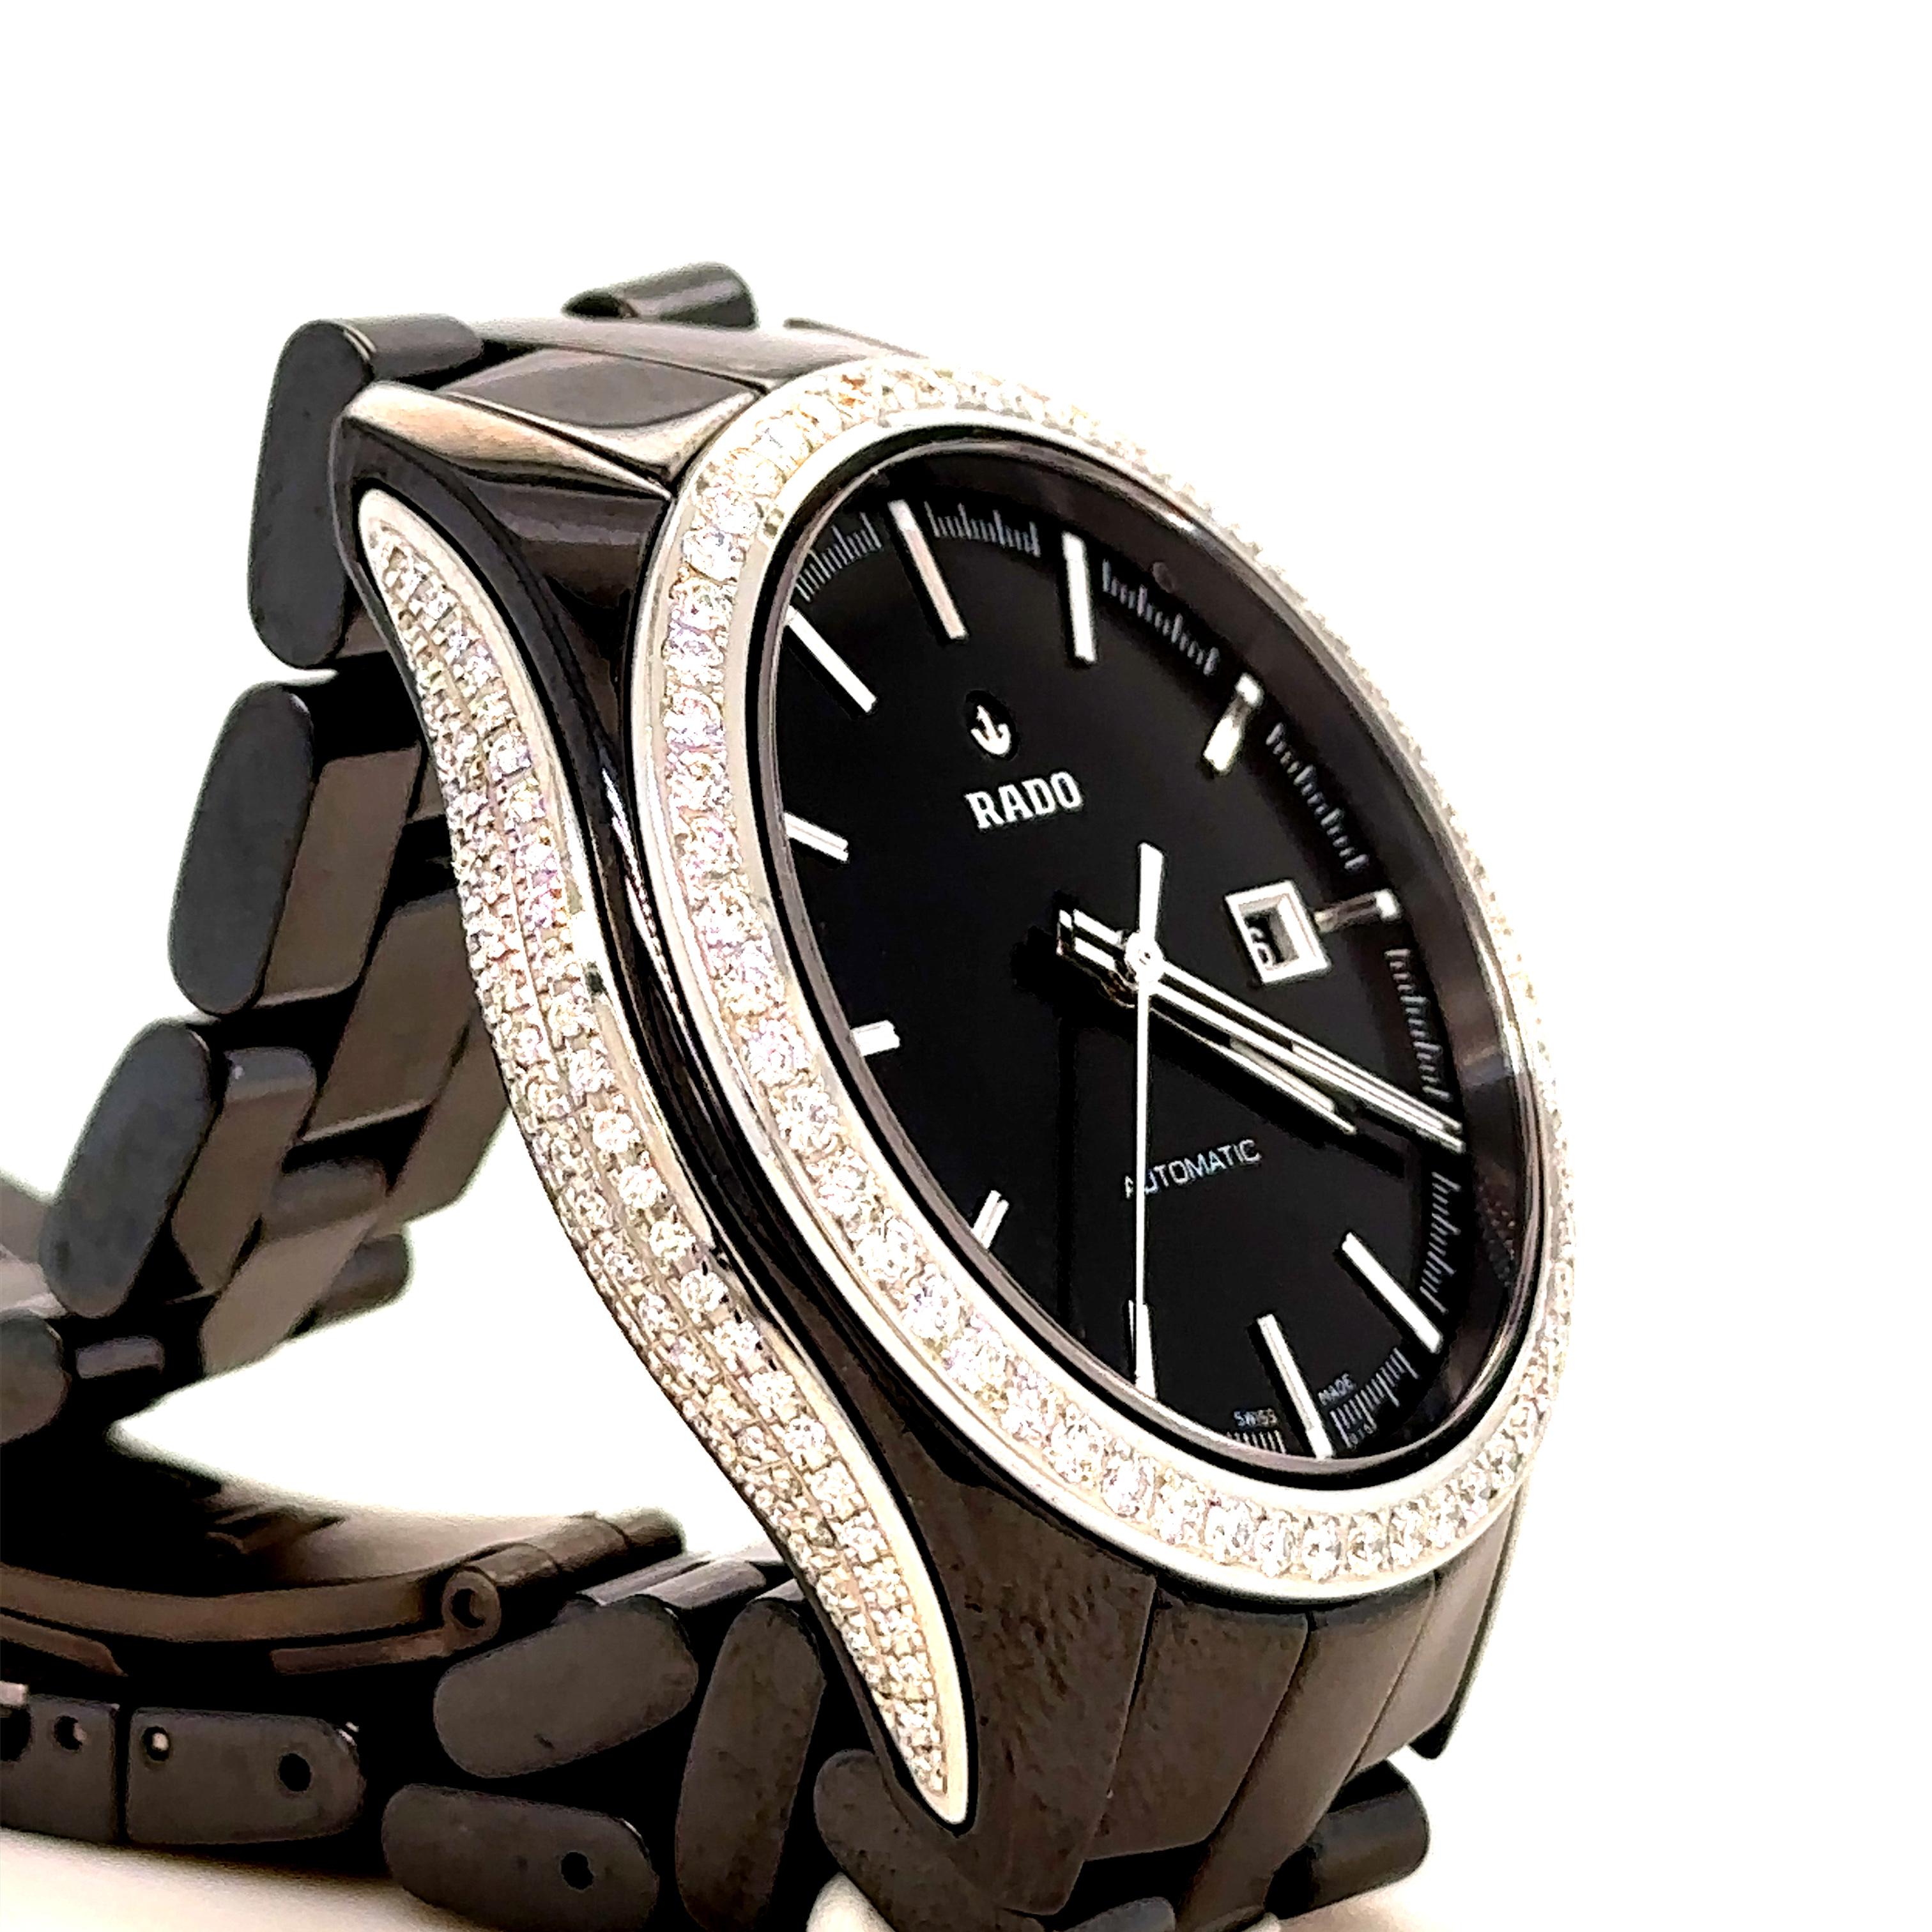 rado hyperchrome women's watch